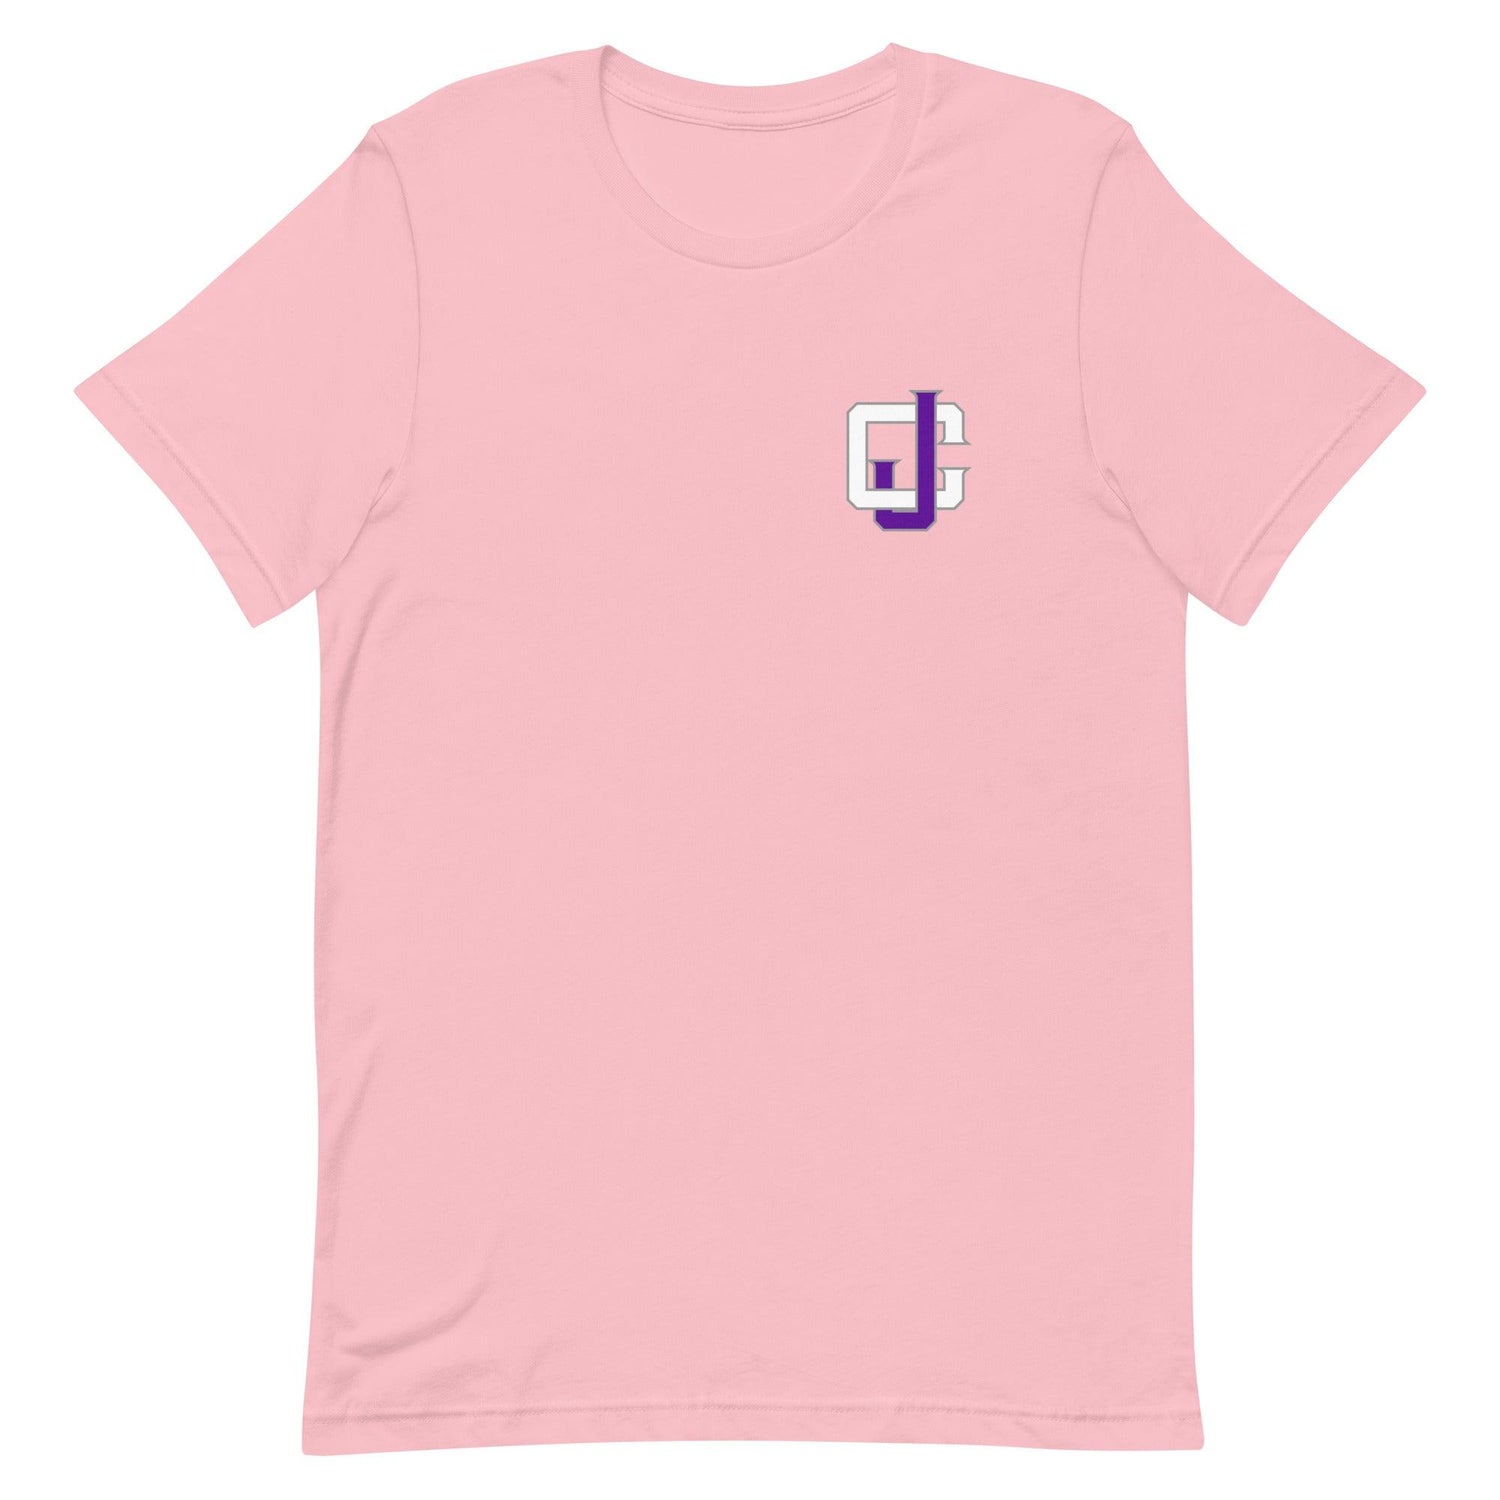 Jayven Cofer "Essential" t-shirt - Fan Arch